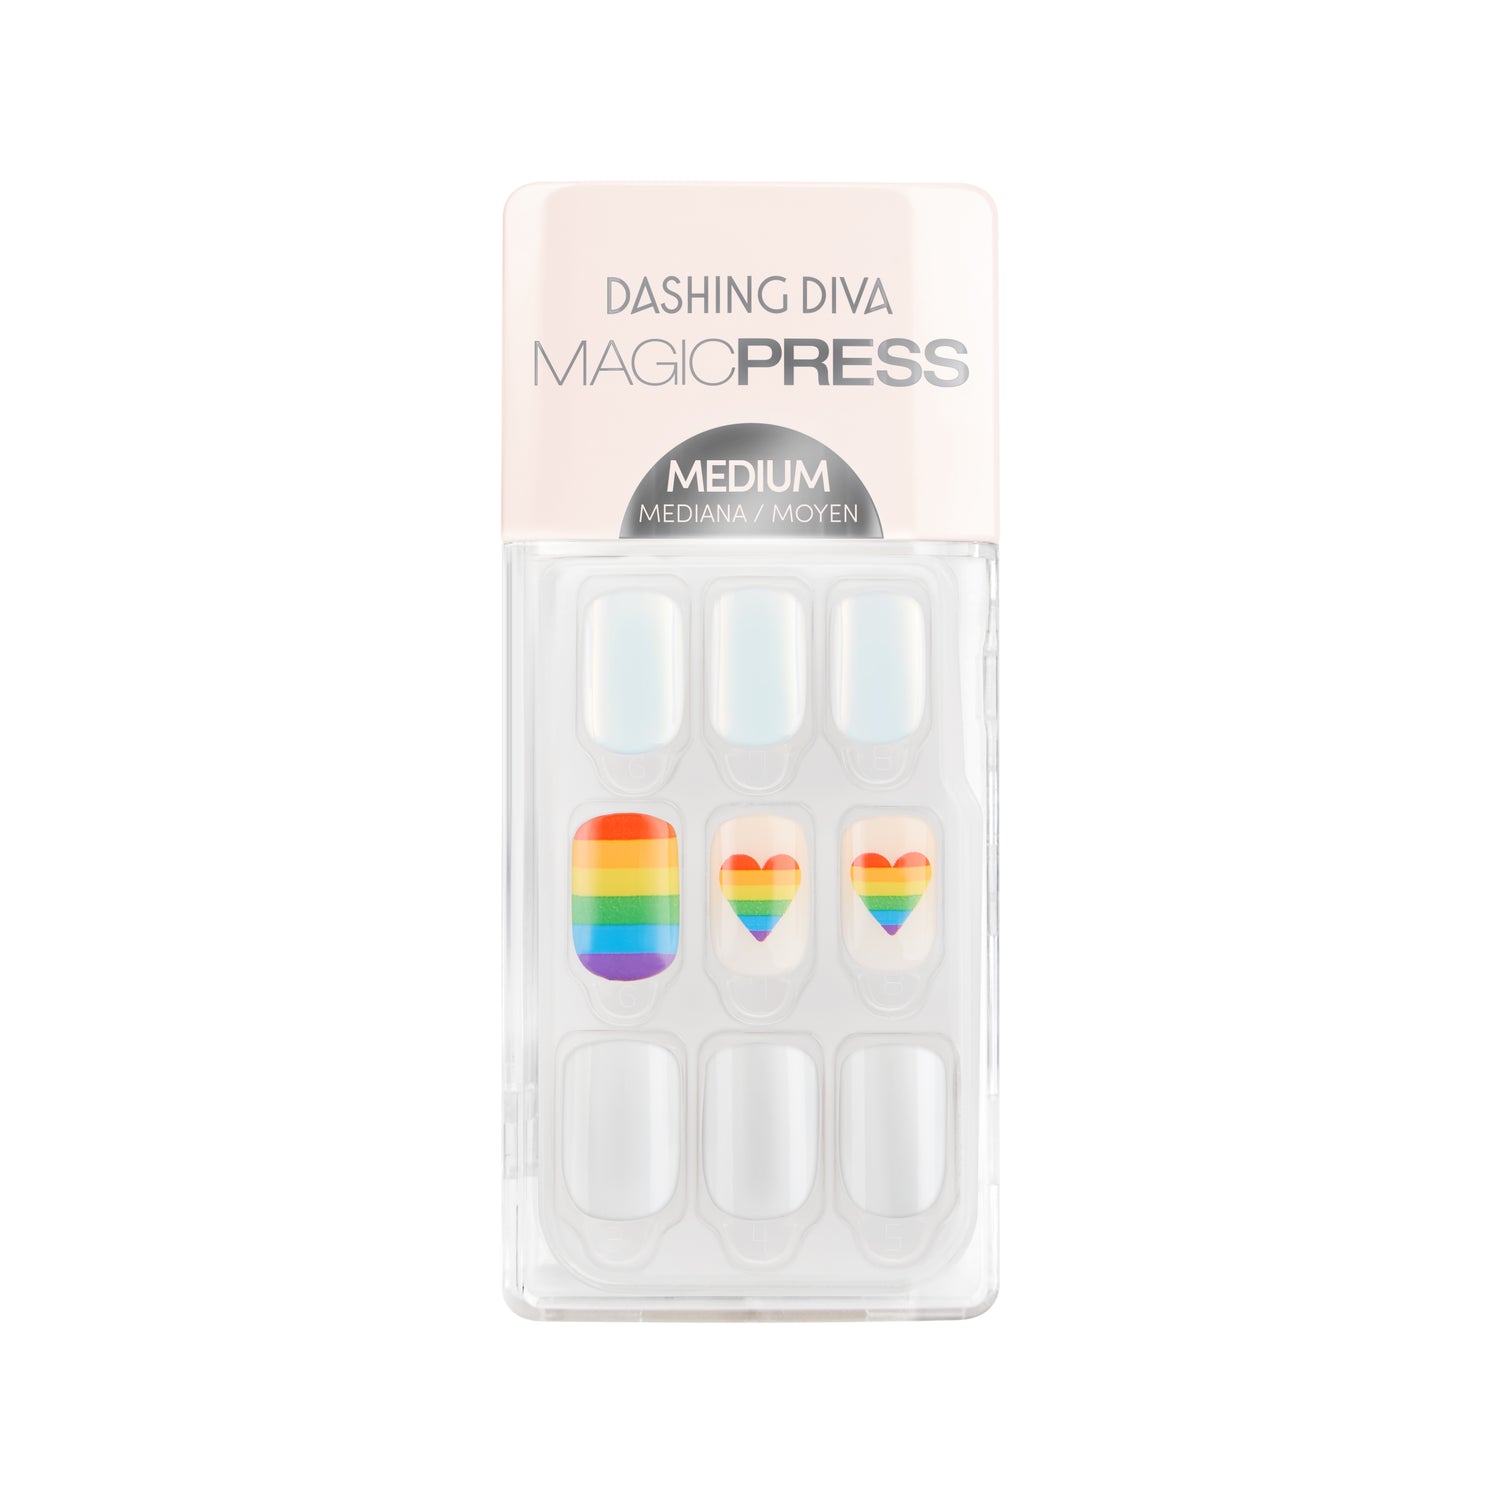 Dashing Diva MAGIC PRESS medium, square white press on gel nails with Pride rainbow heart accents.